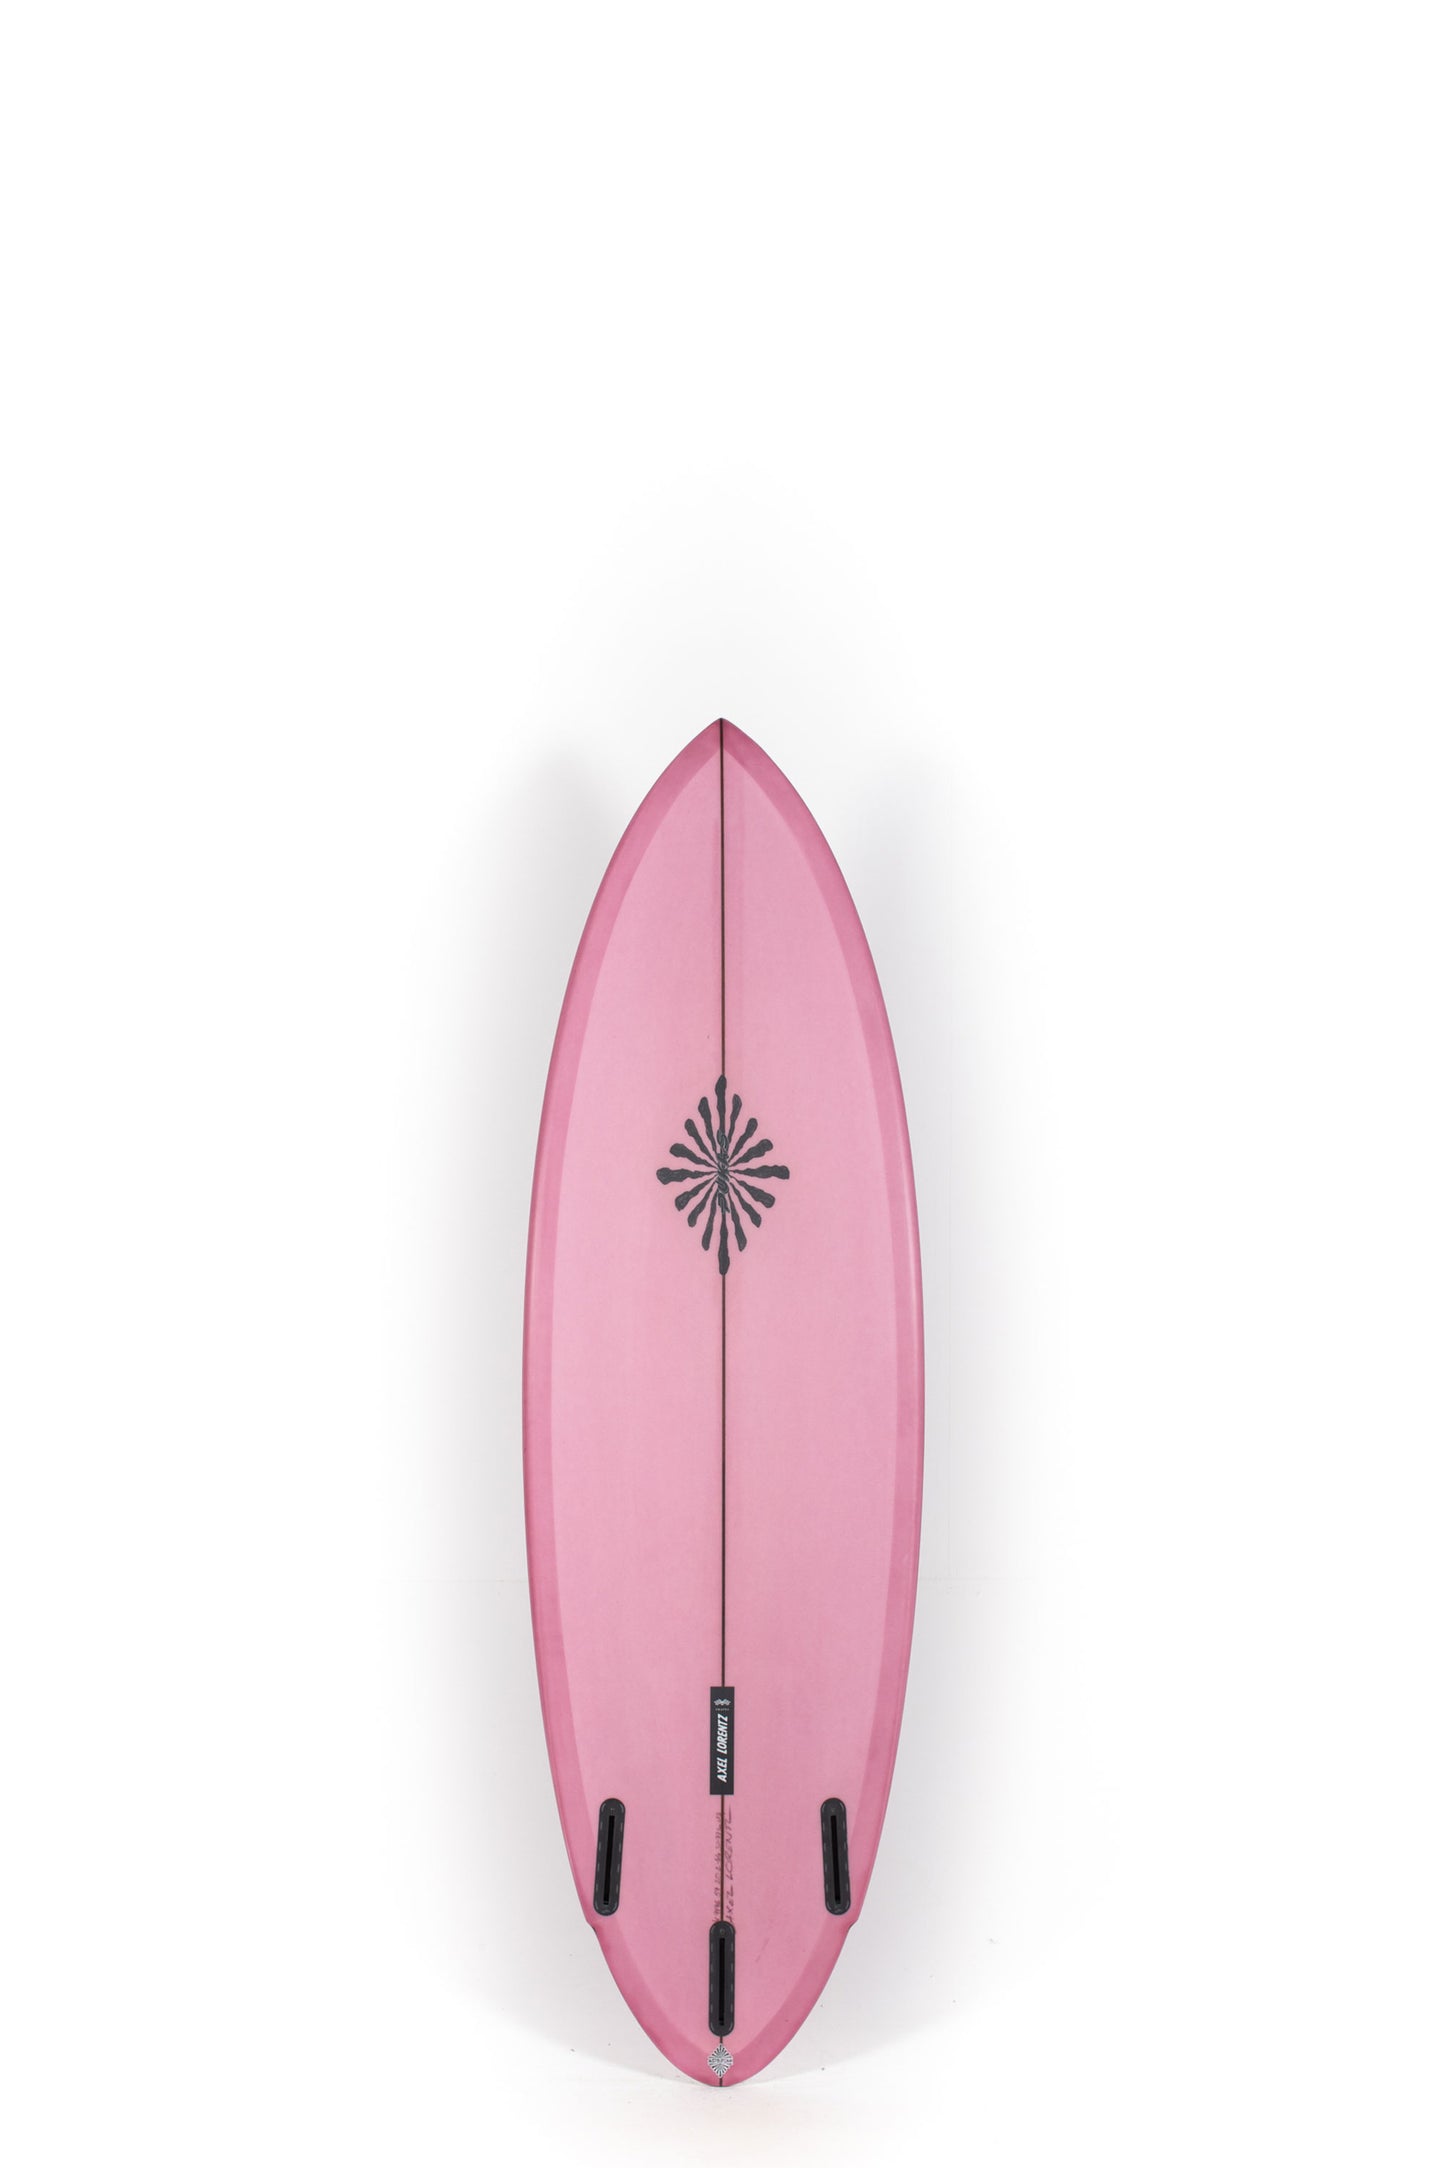 Pukas Surf Shop - Pukas Surfboards - ACID PLAN by Axel Lorentz - 5'9" x 20 x 2,44 x 30,77L - AX09196